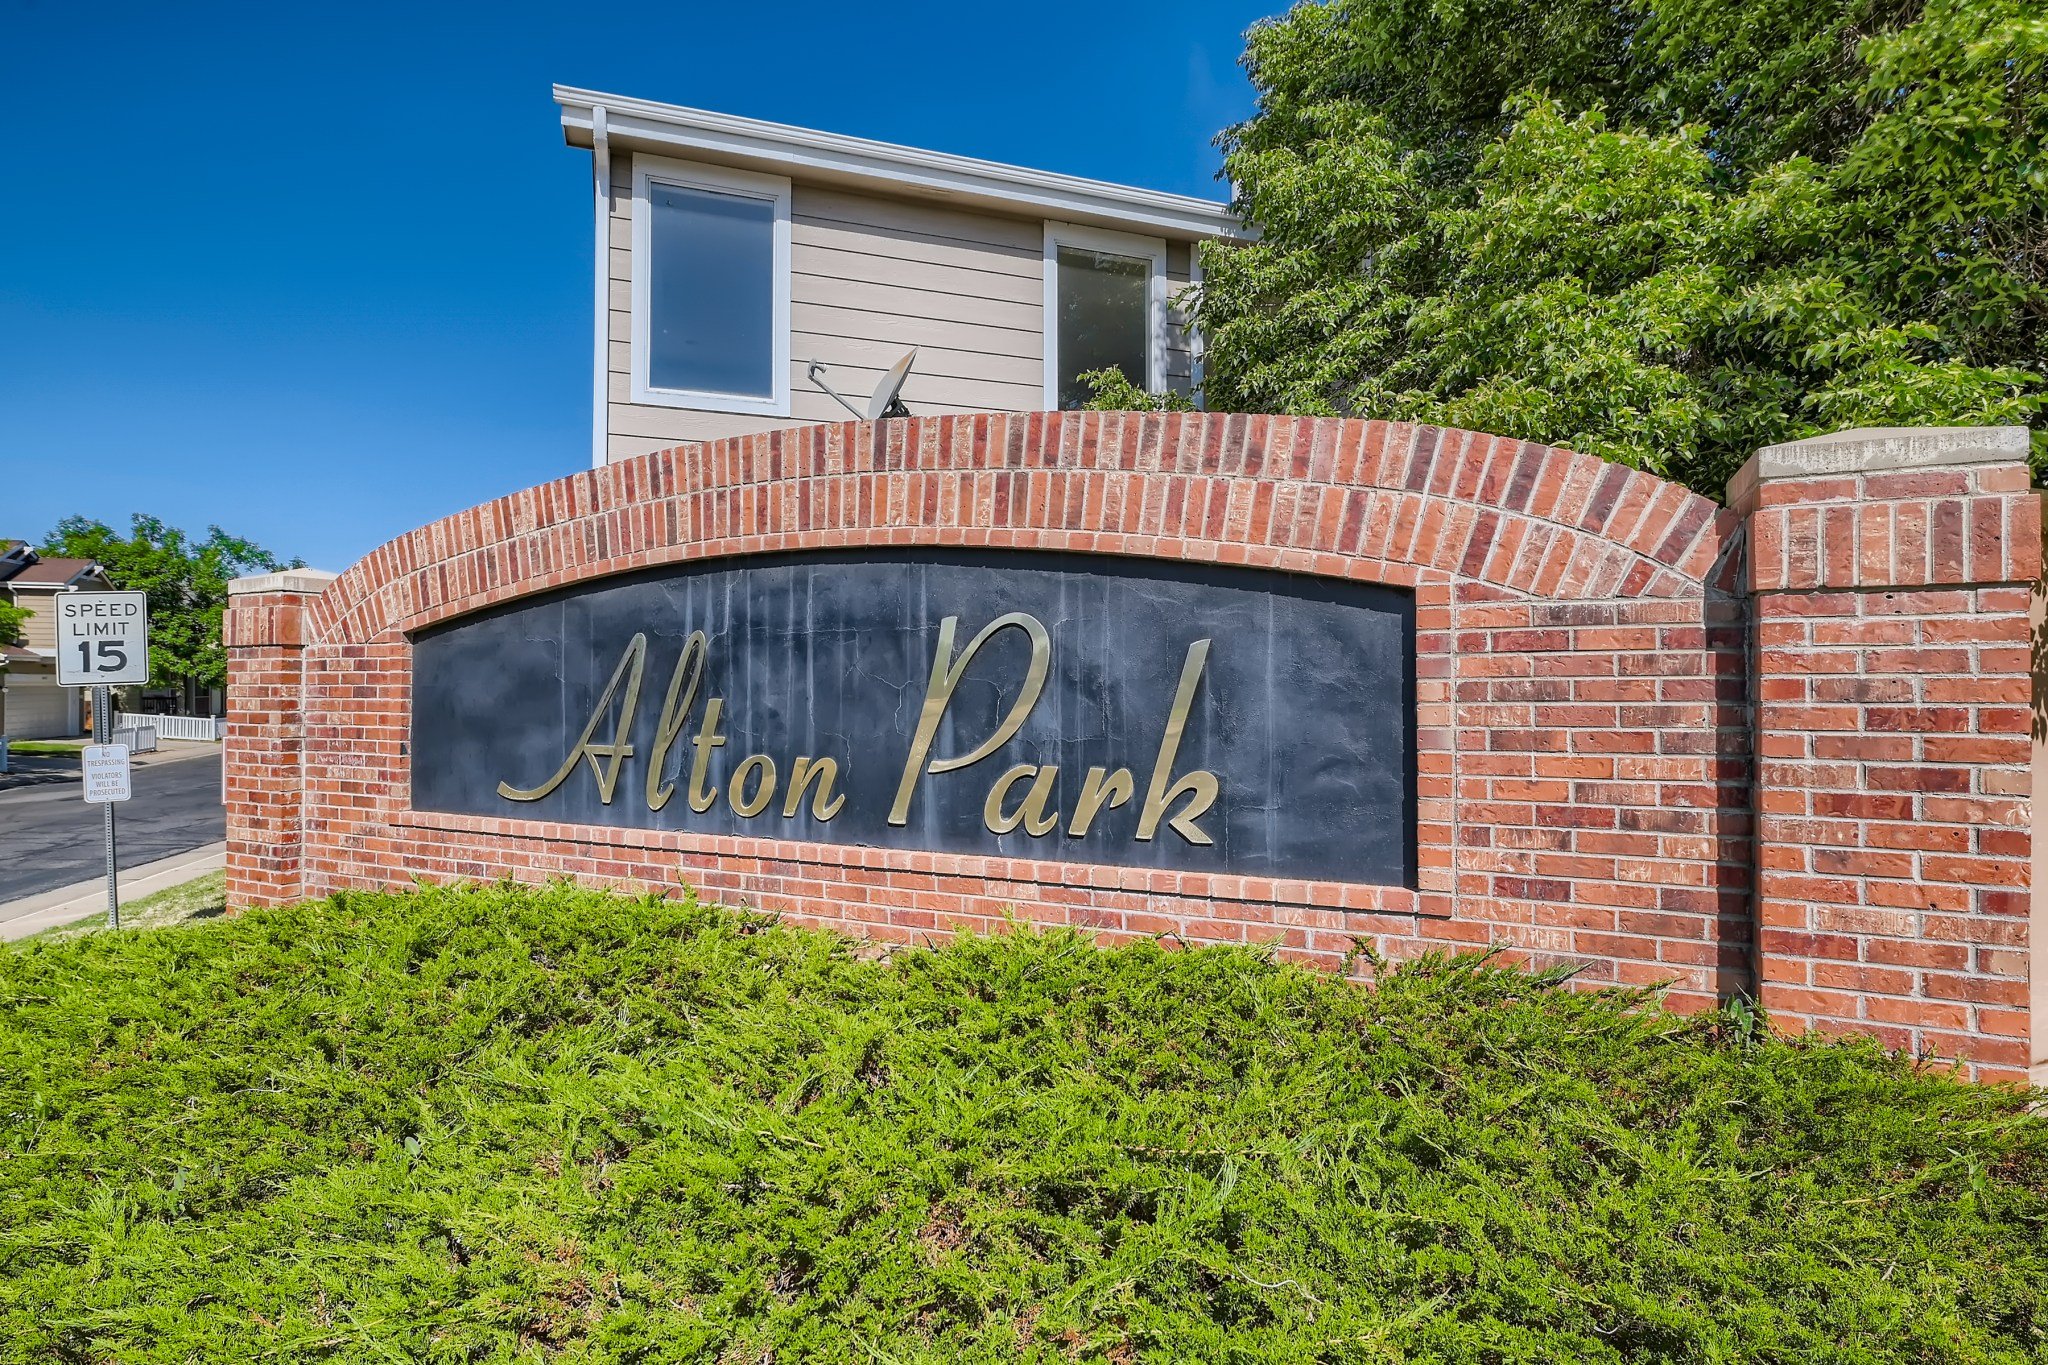 38 Alton Park Community.jpg